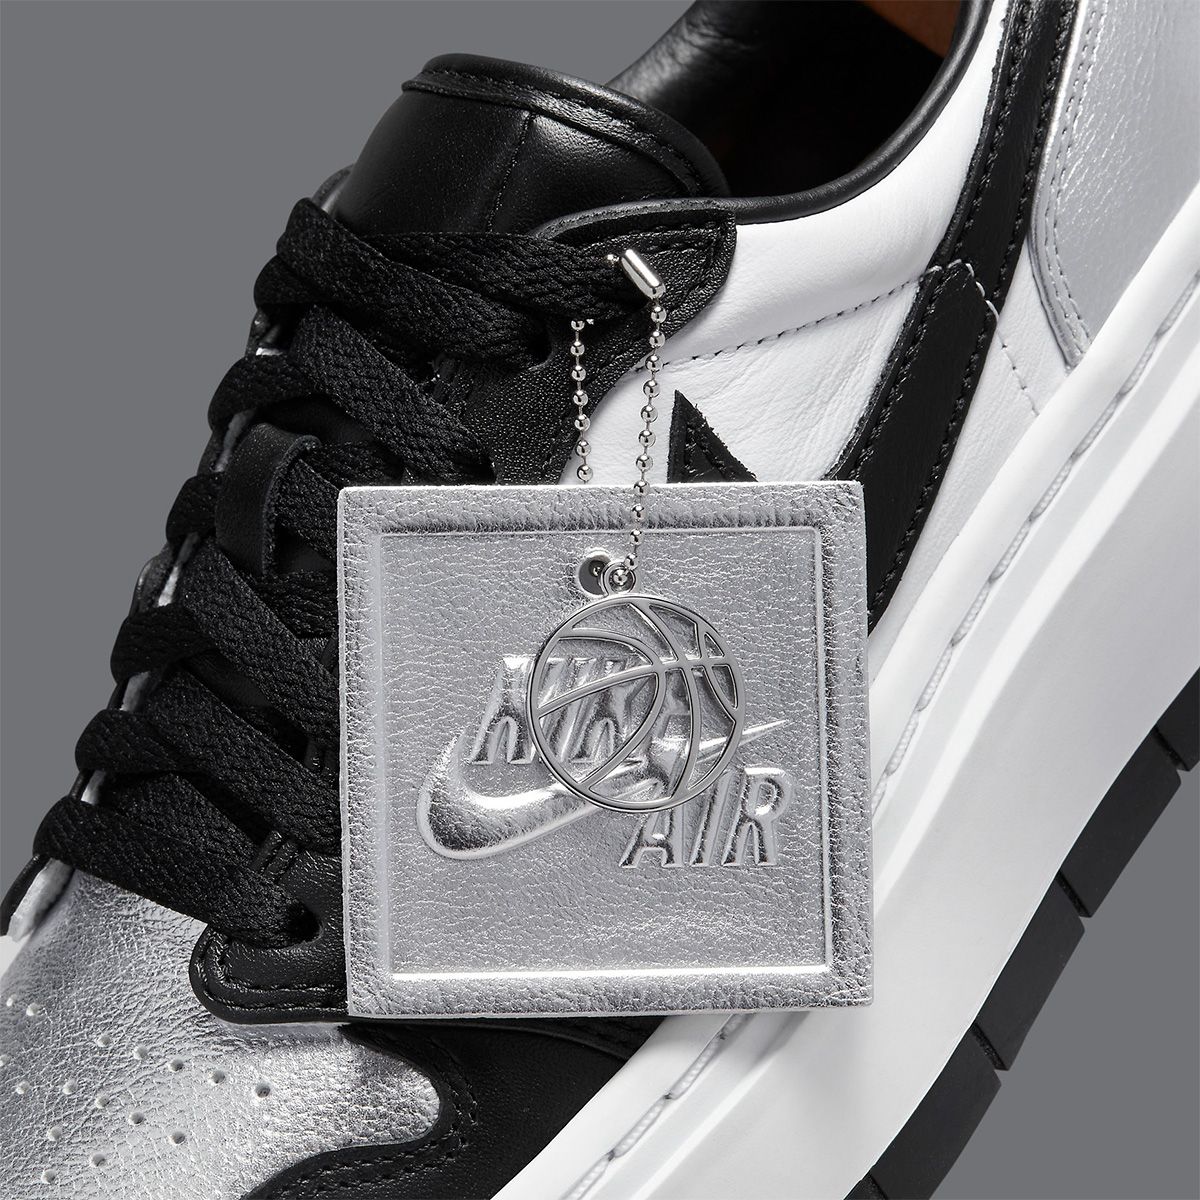 Air Jordan 1 Elevate Low “Silver Toe” Arrives October 19 | House of Heat°